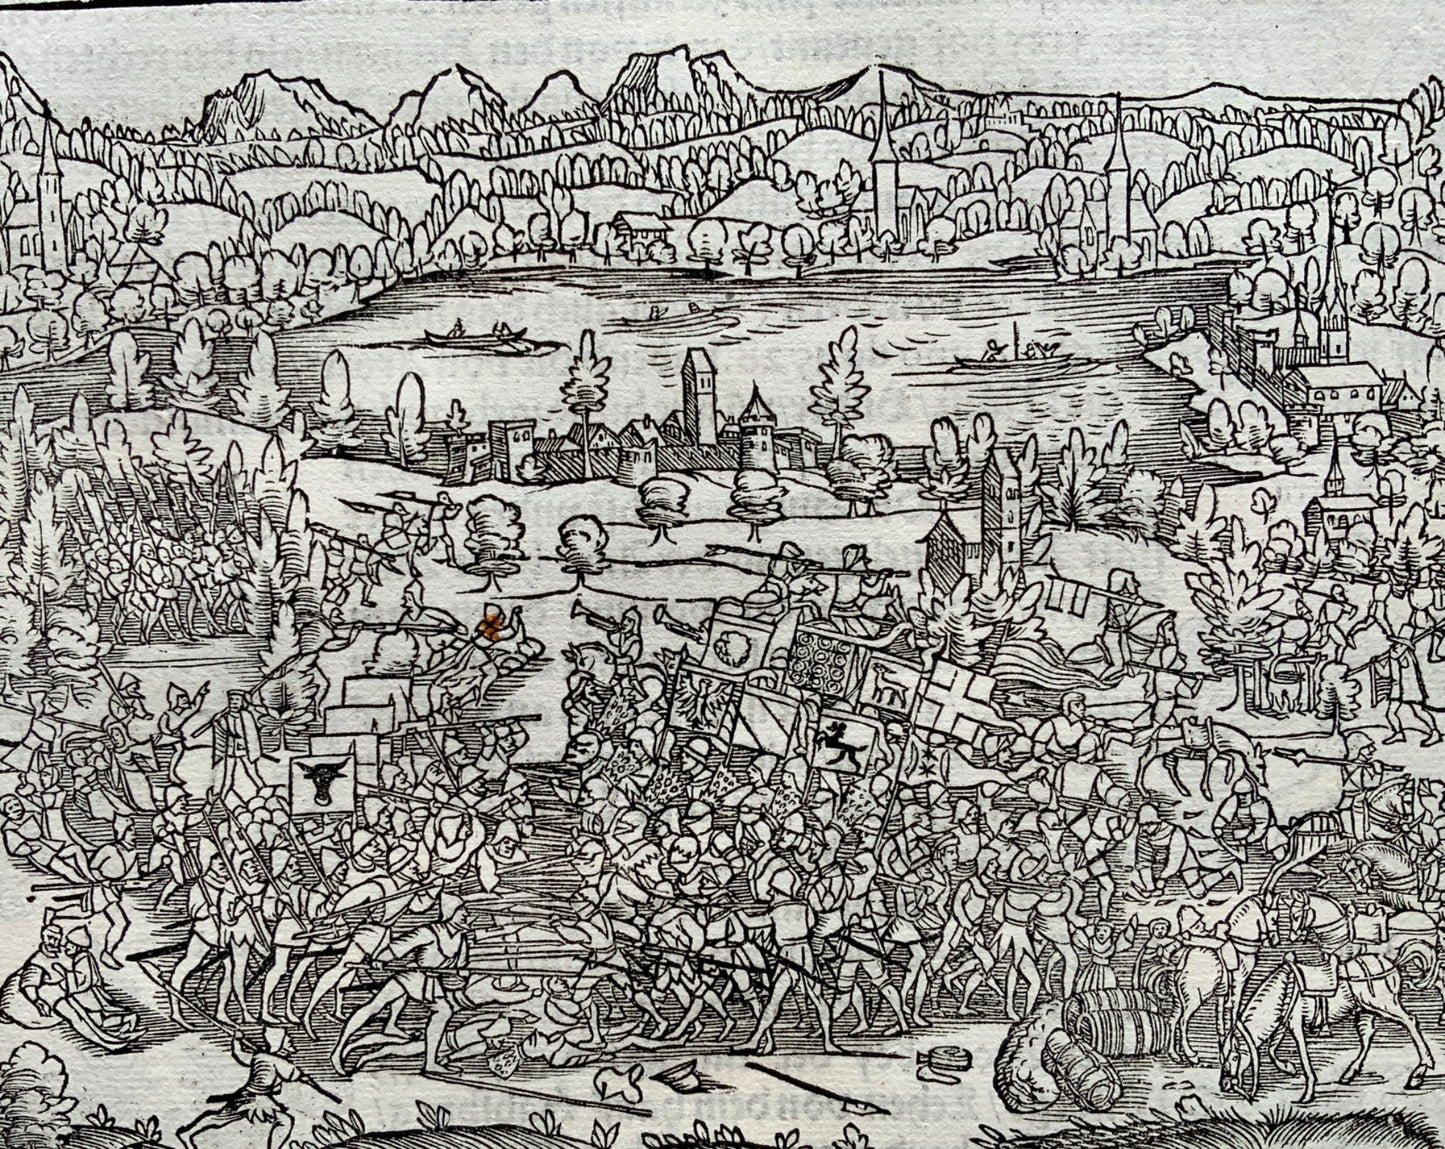 1548 Joh. Stumpf - Battle by Sempach Switzerland - Habsburg Wars - woodcut leaf - Military history